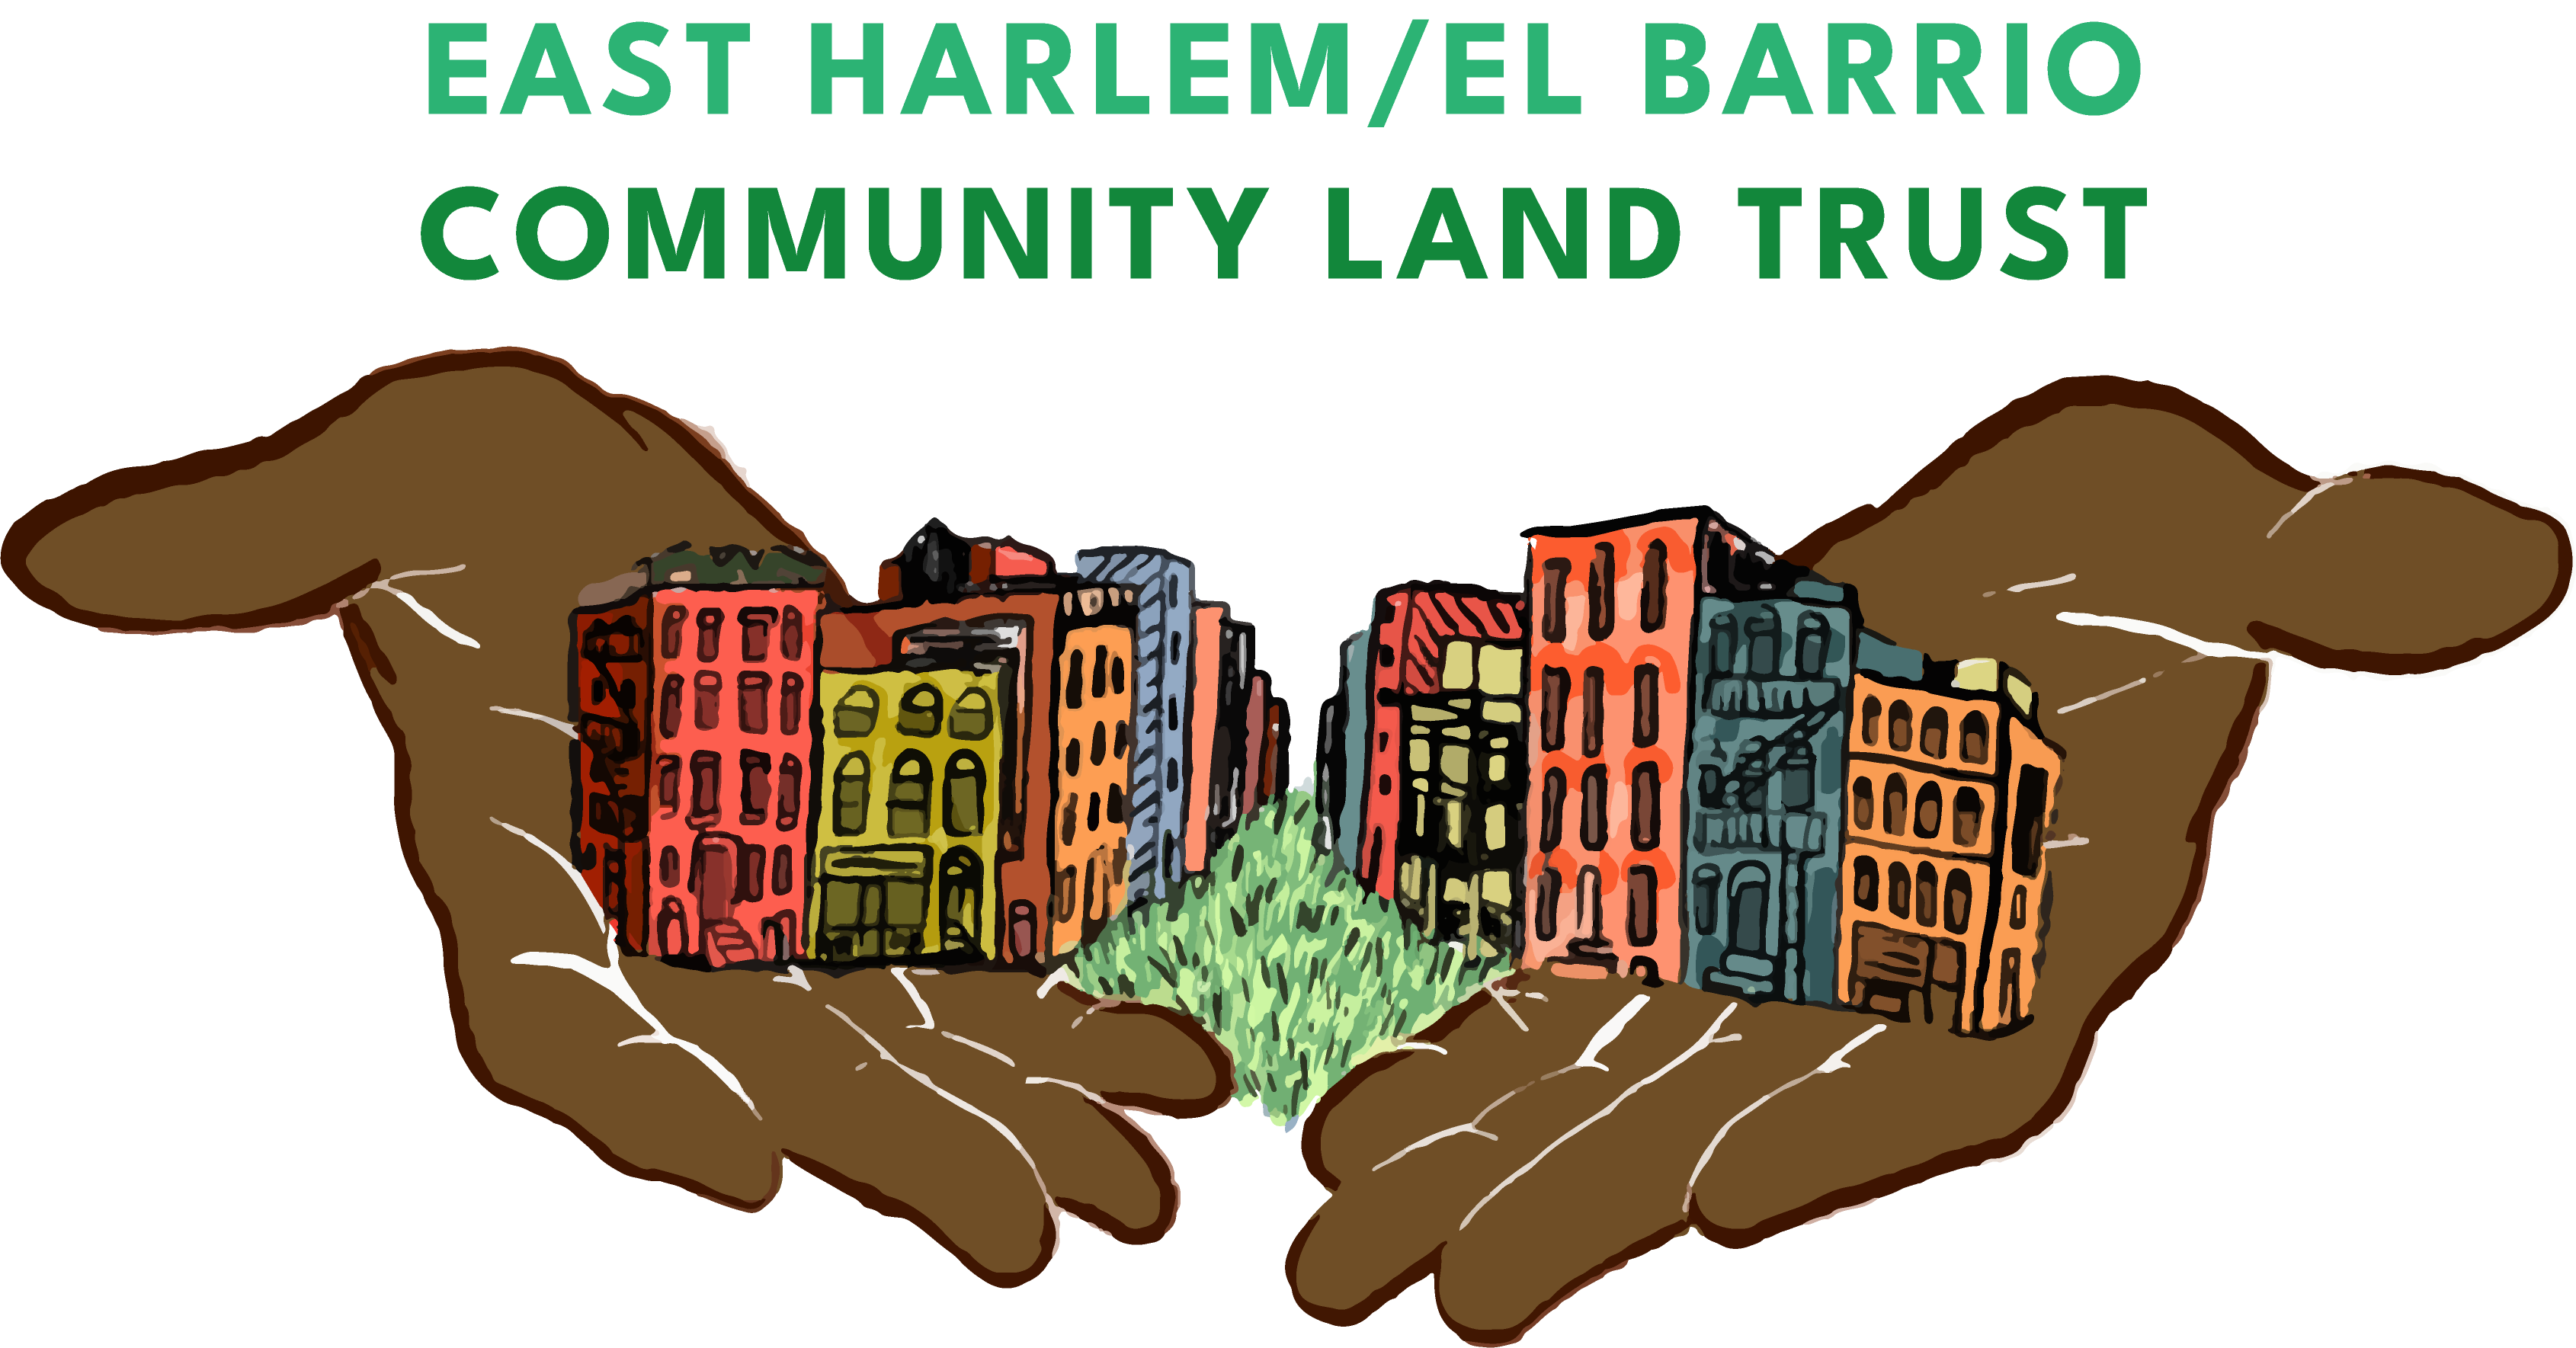 East Harlem/El Barrio Community Land Trust logo